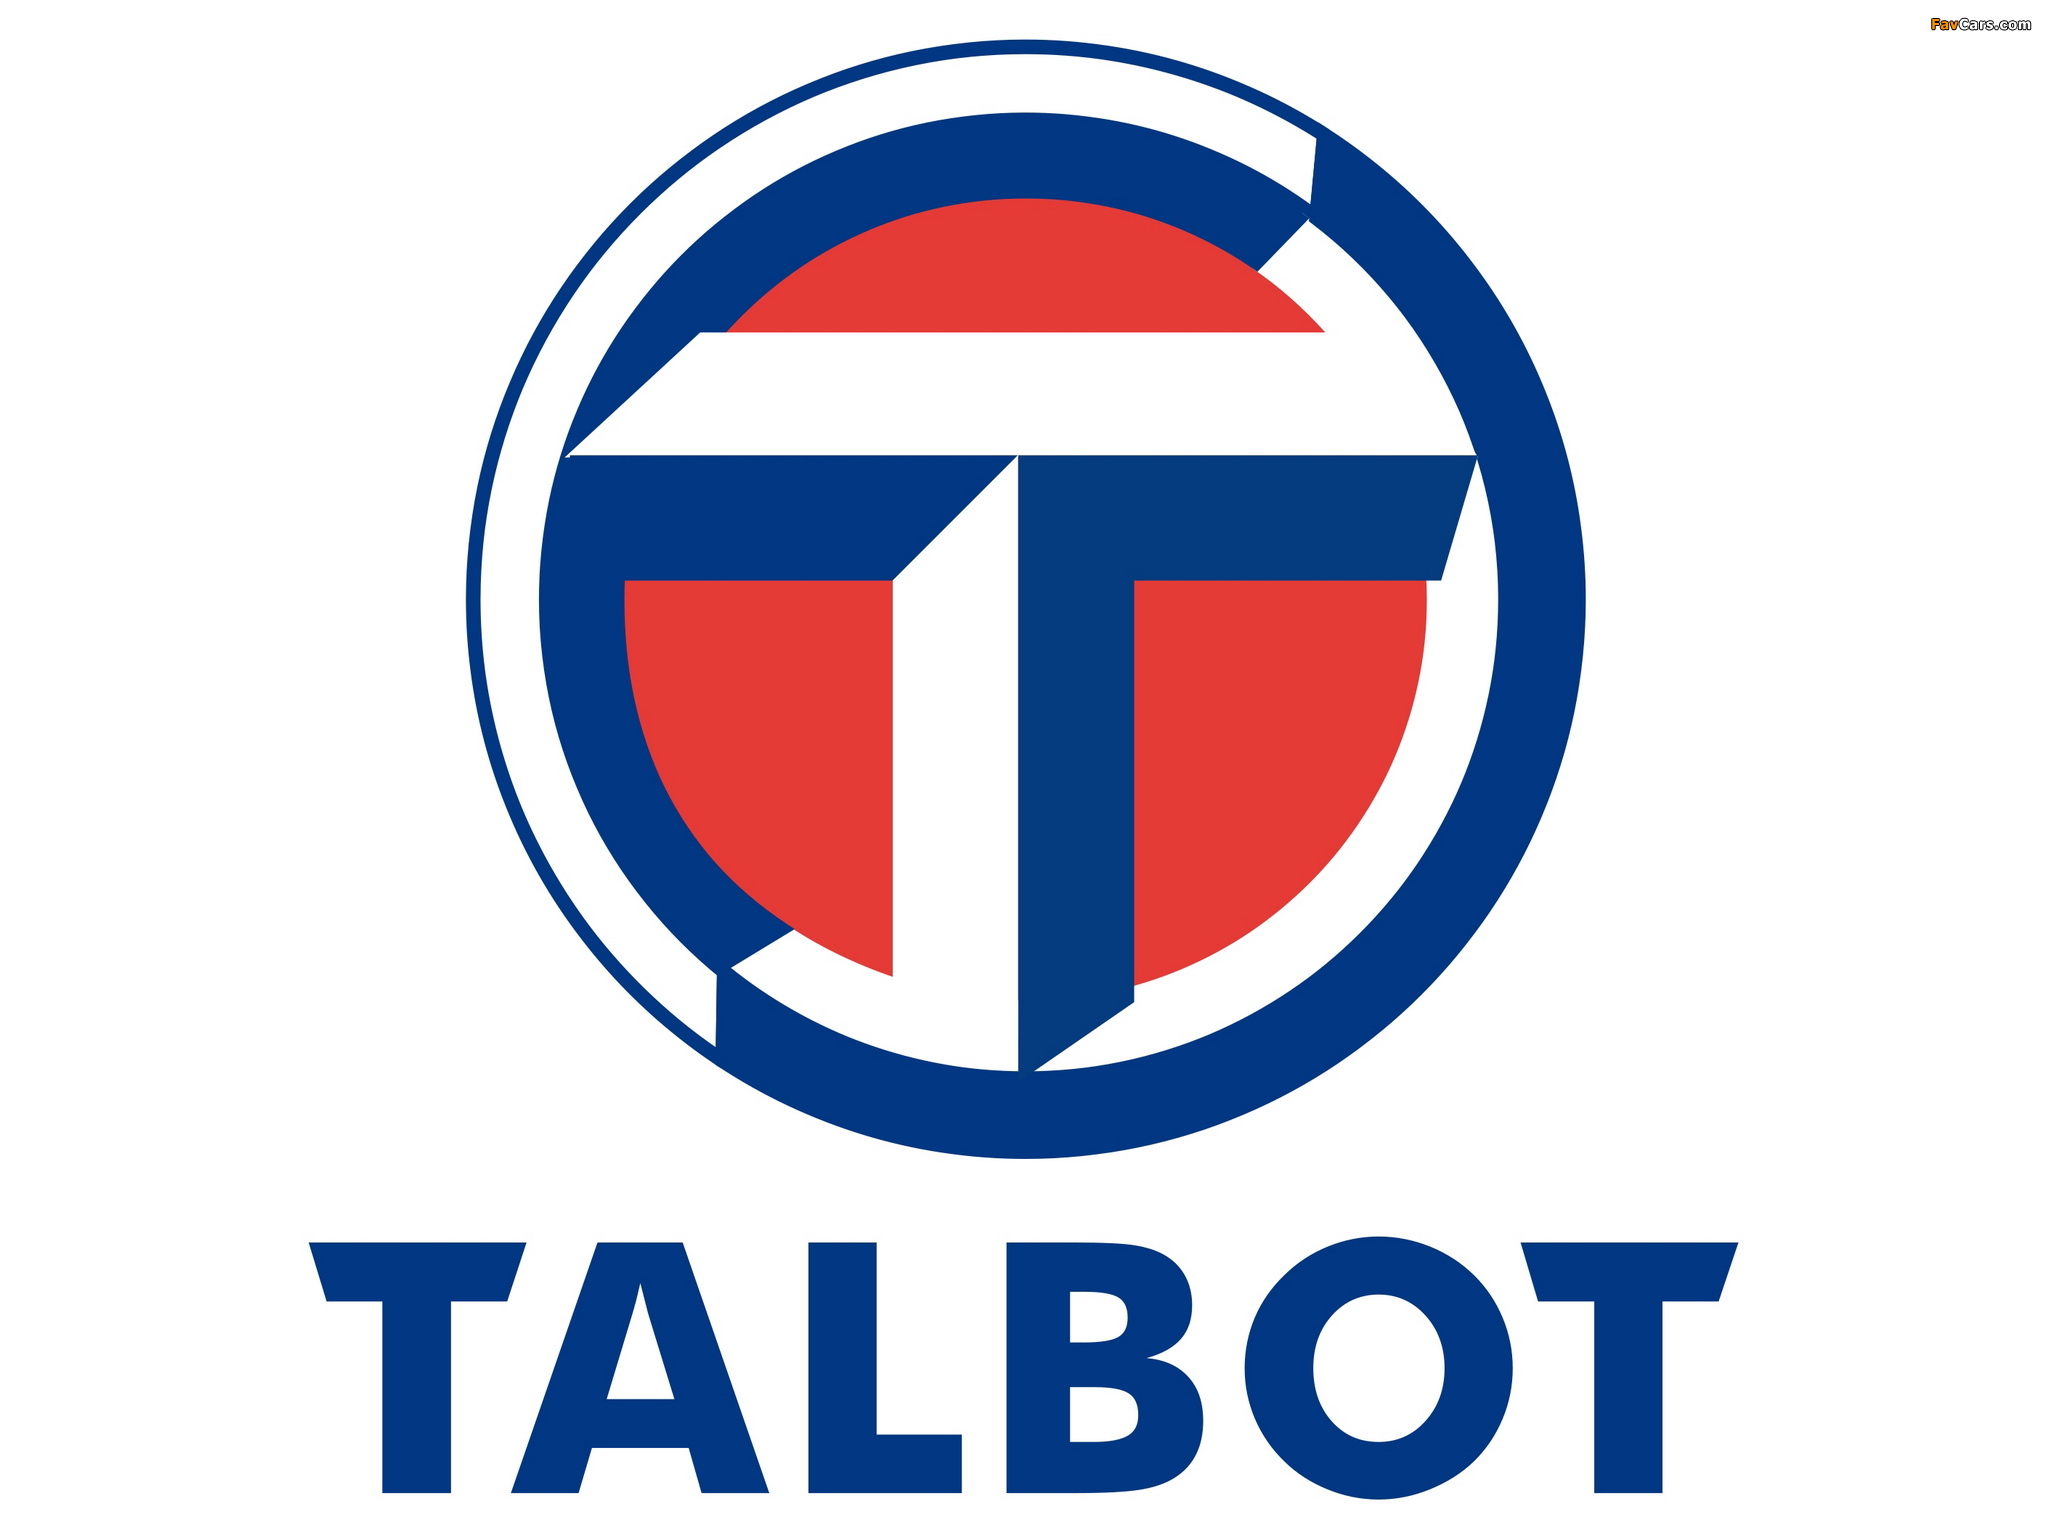 Talbot images (2048 x 1536)